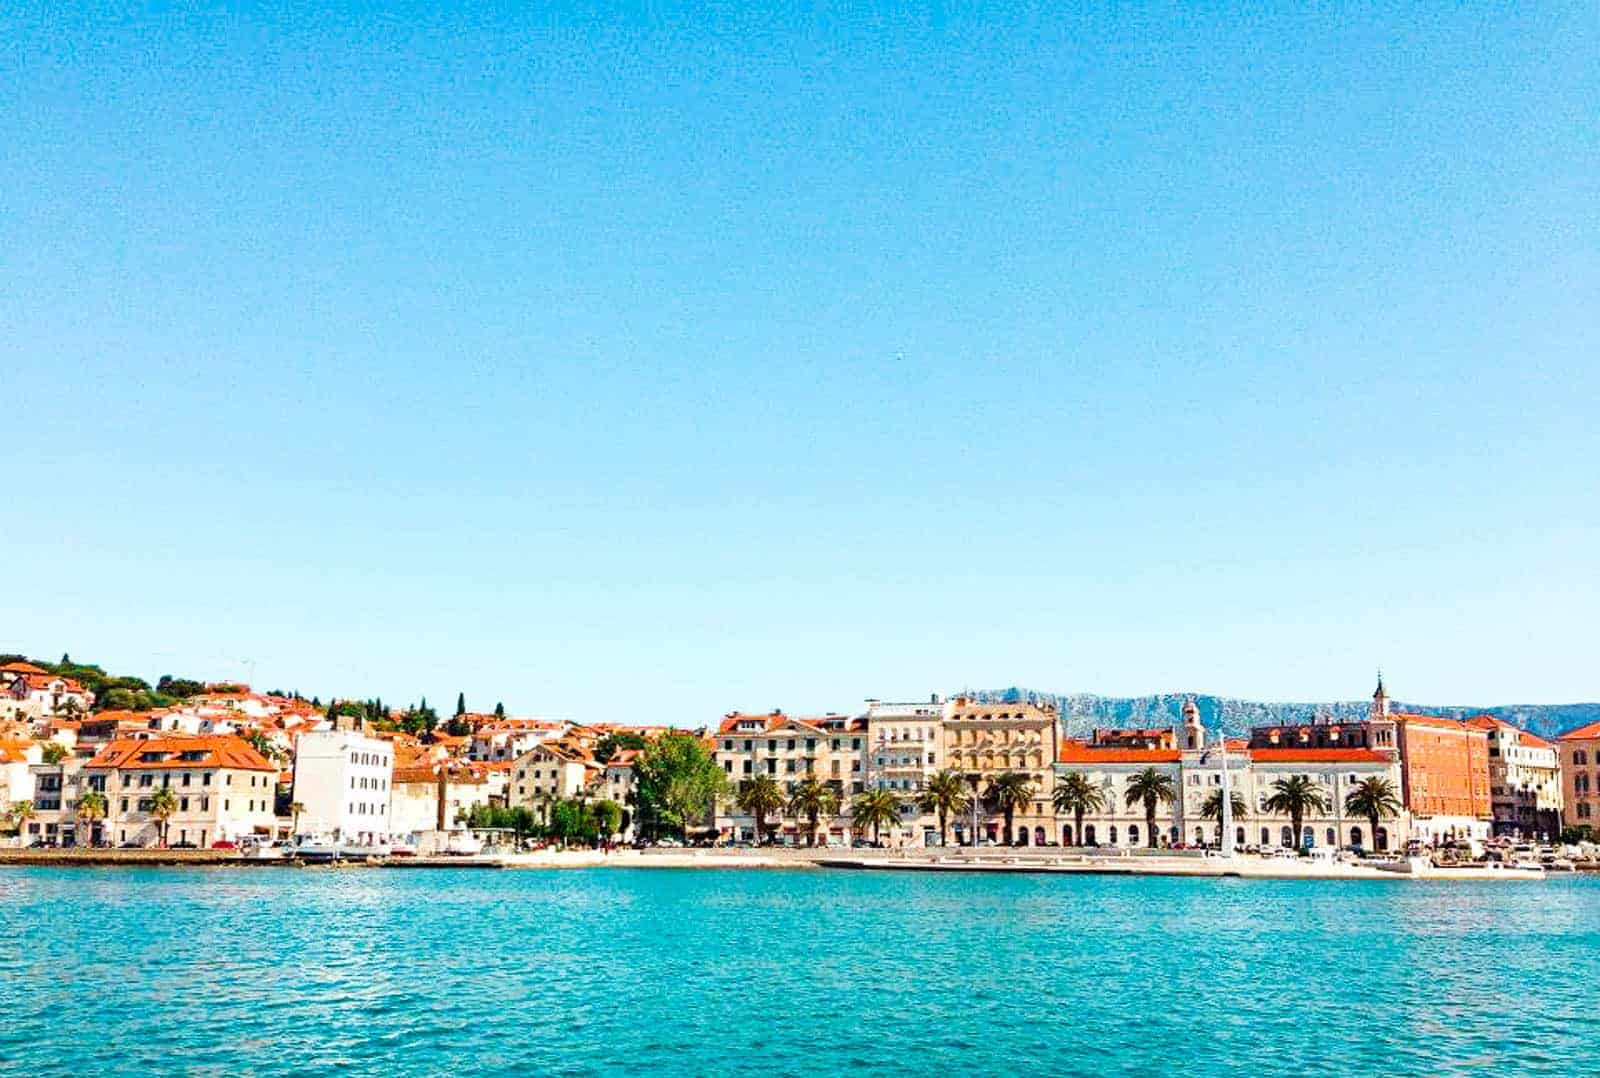 View of the Harbor in Split, Croatia